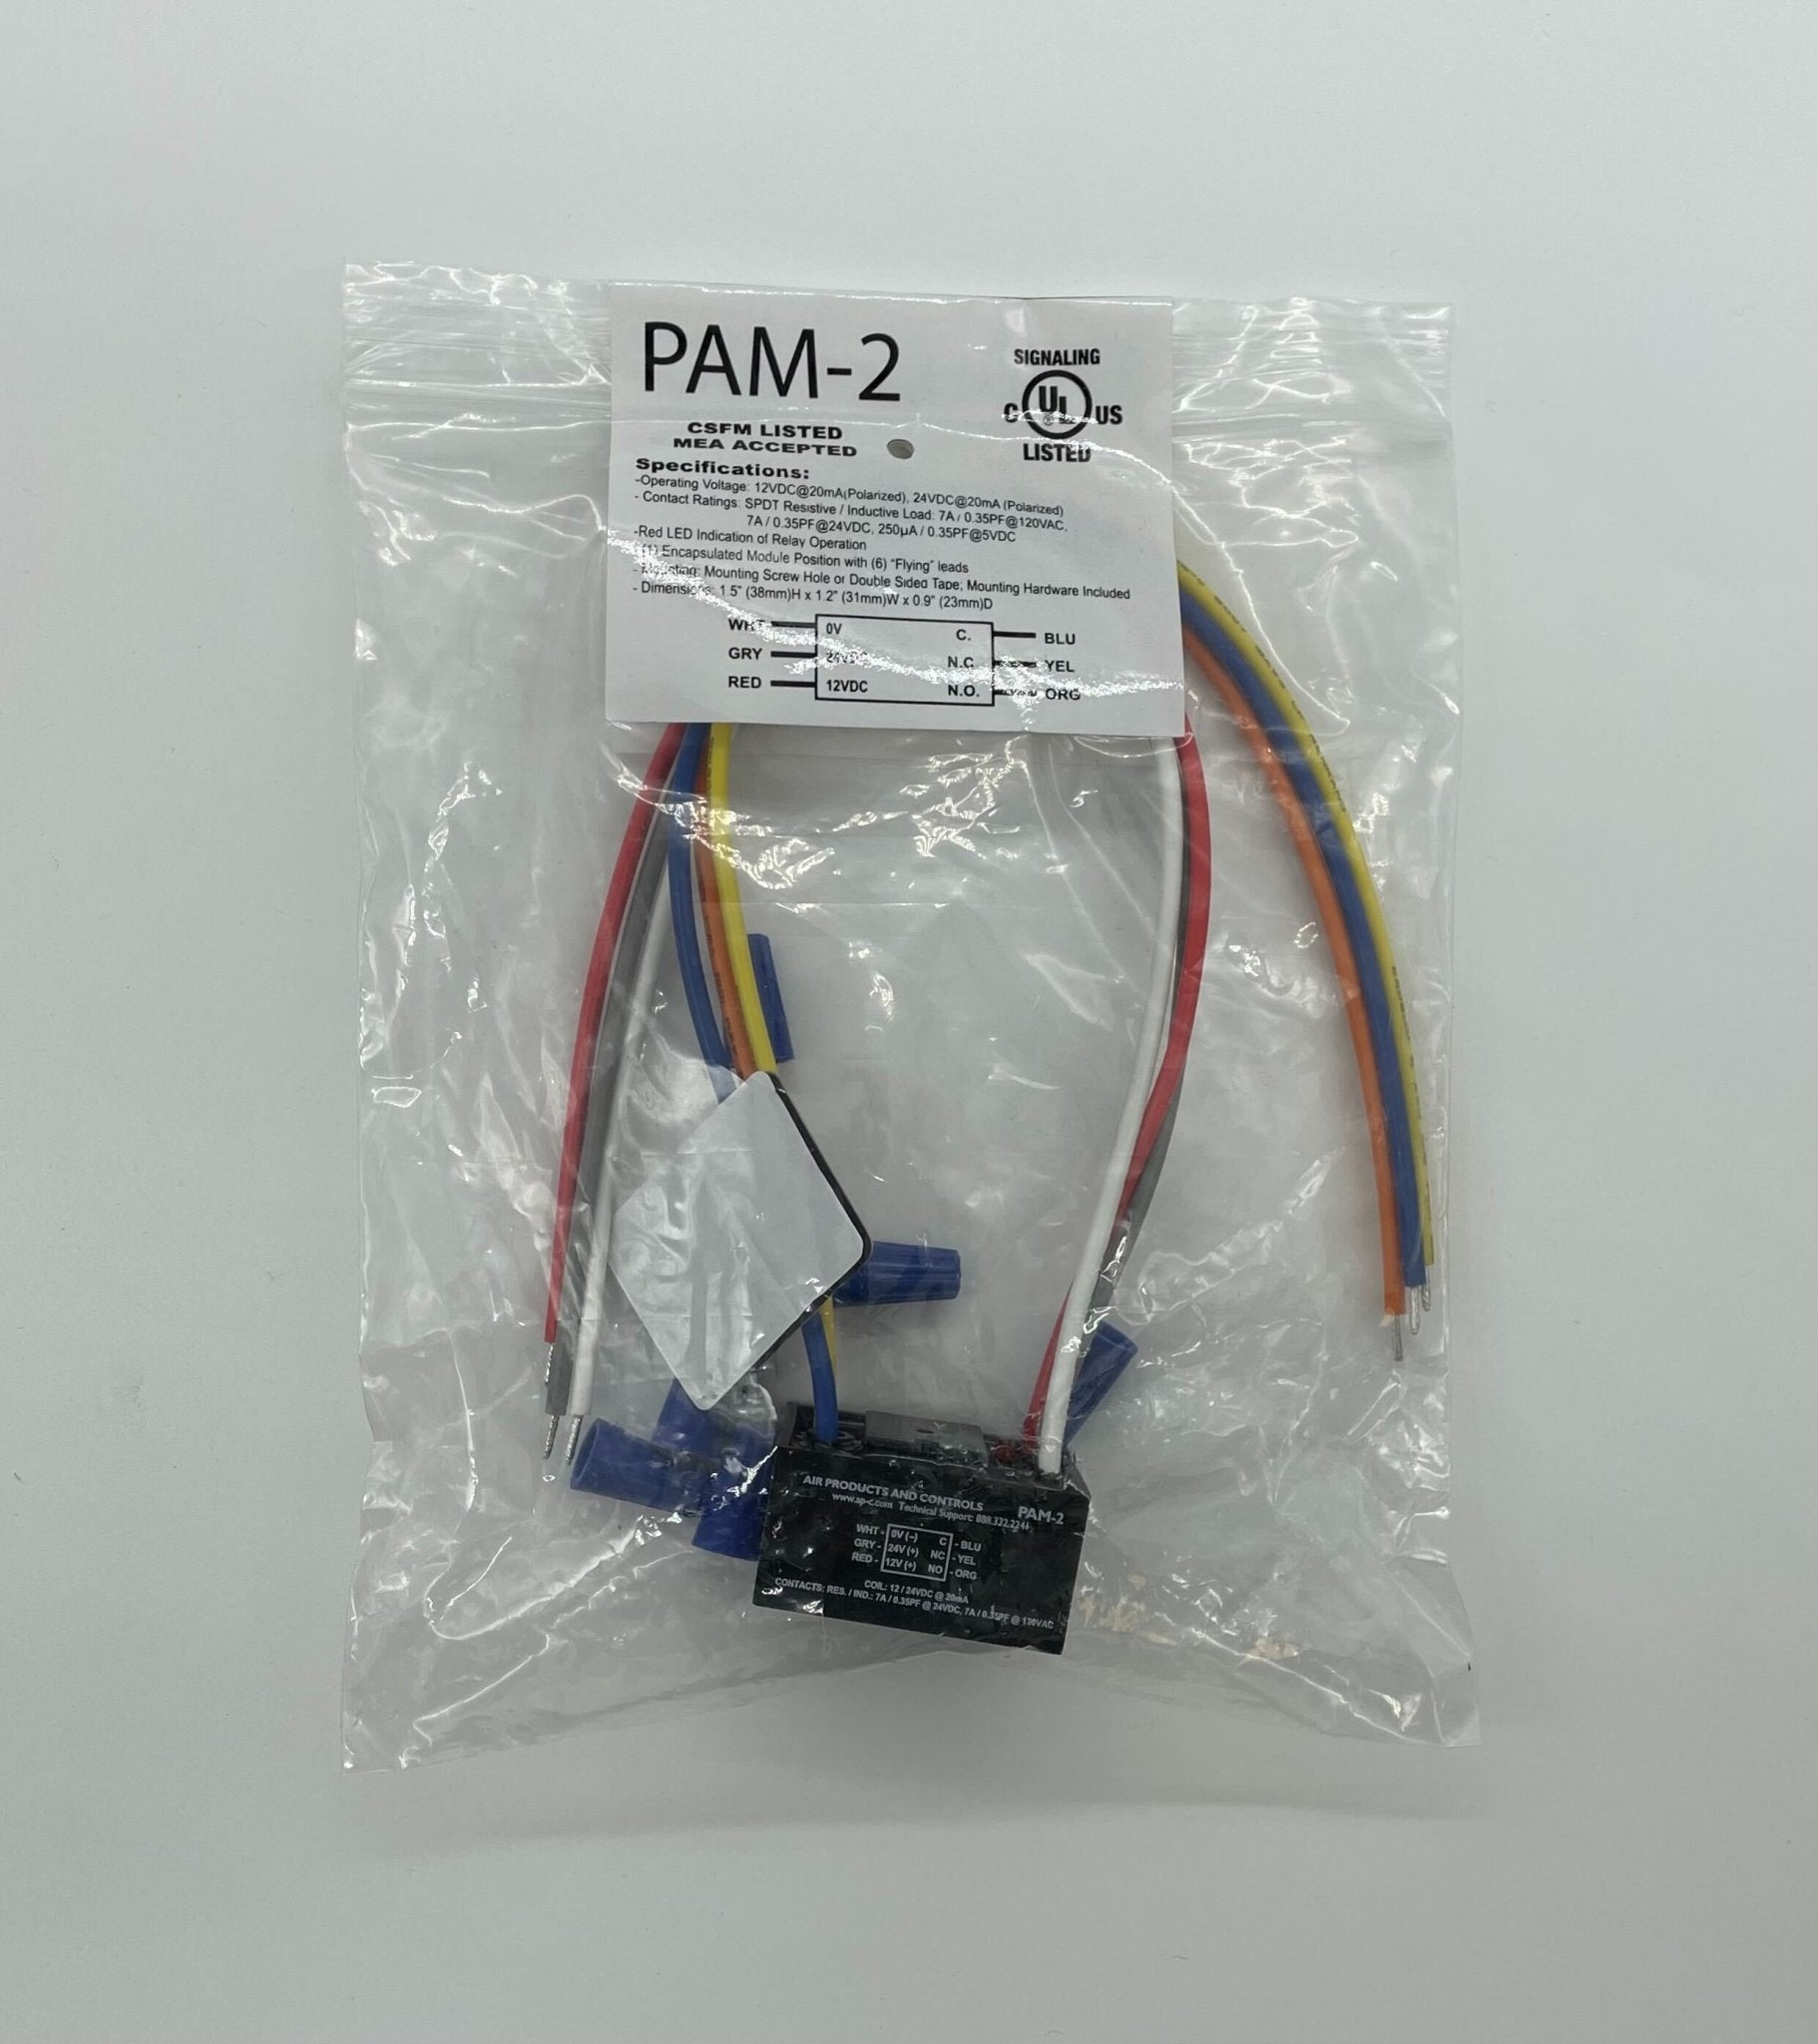 Space Age SSU-PAM-2 Ssu-Pam-2 Multi-Voltage Relay Module - The Fire Alarm Supplier